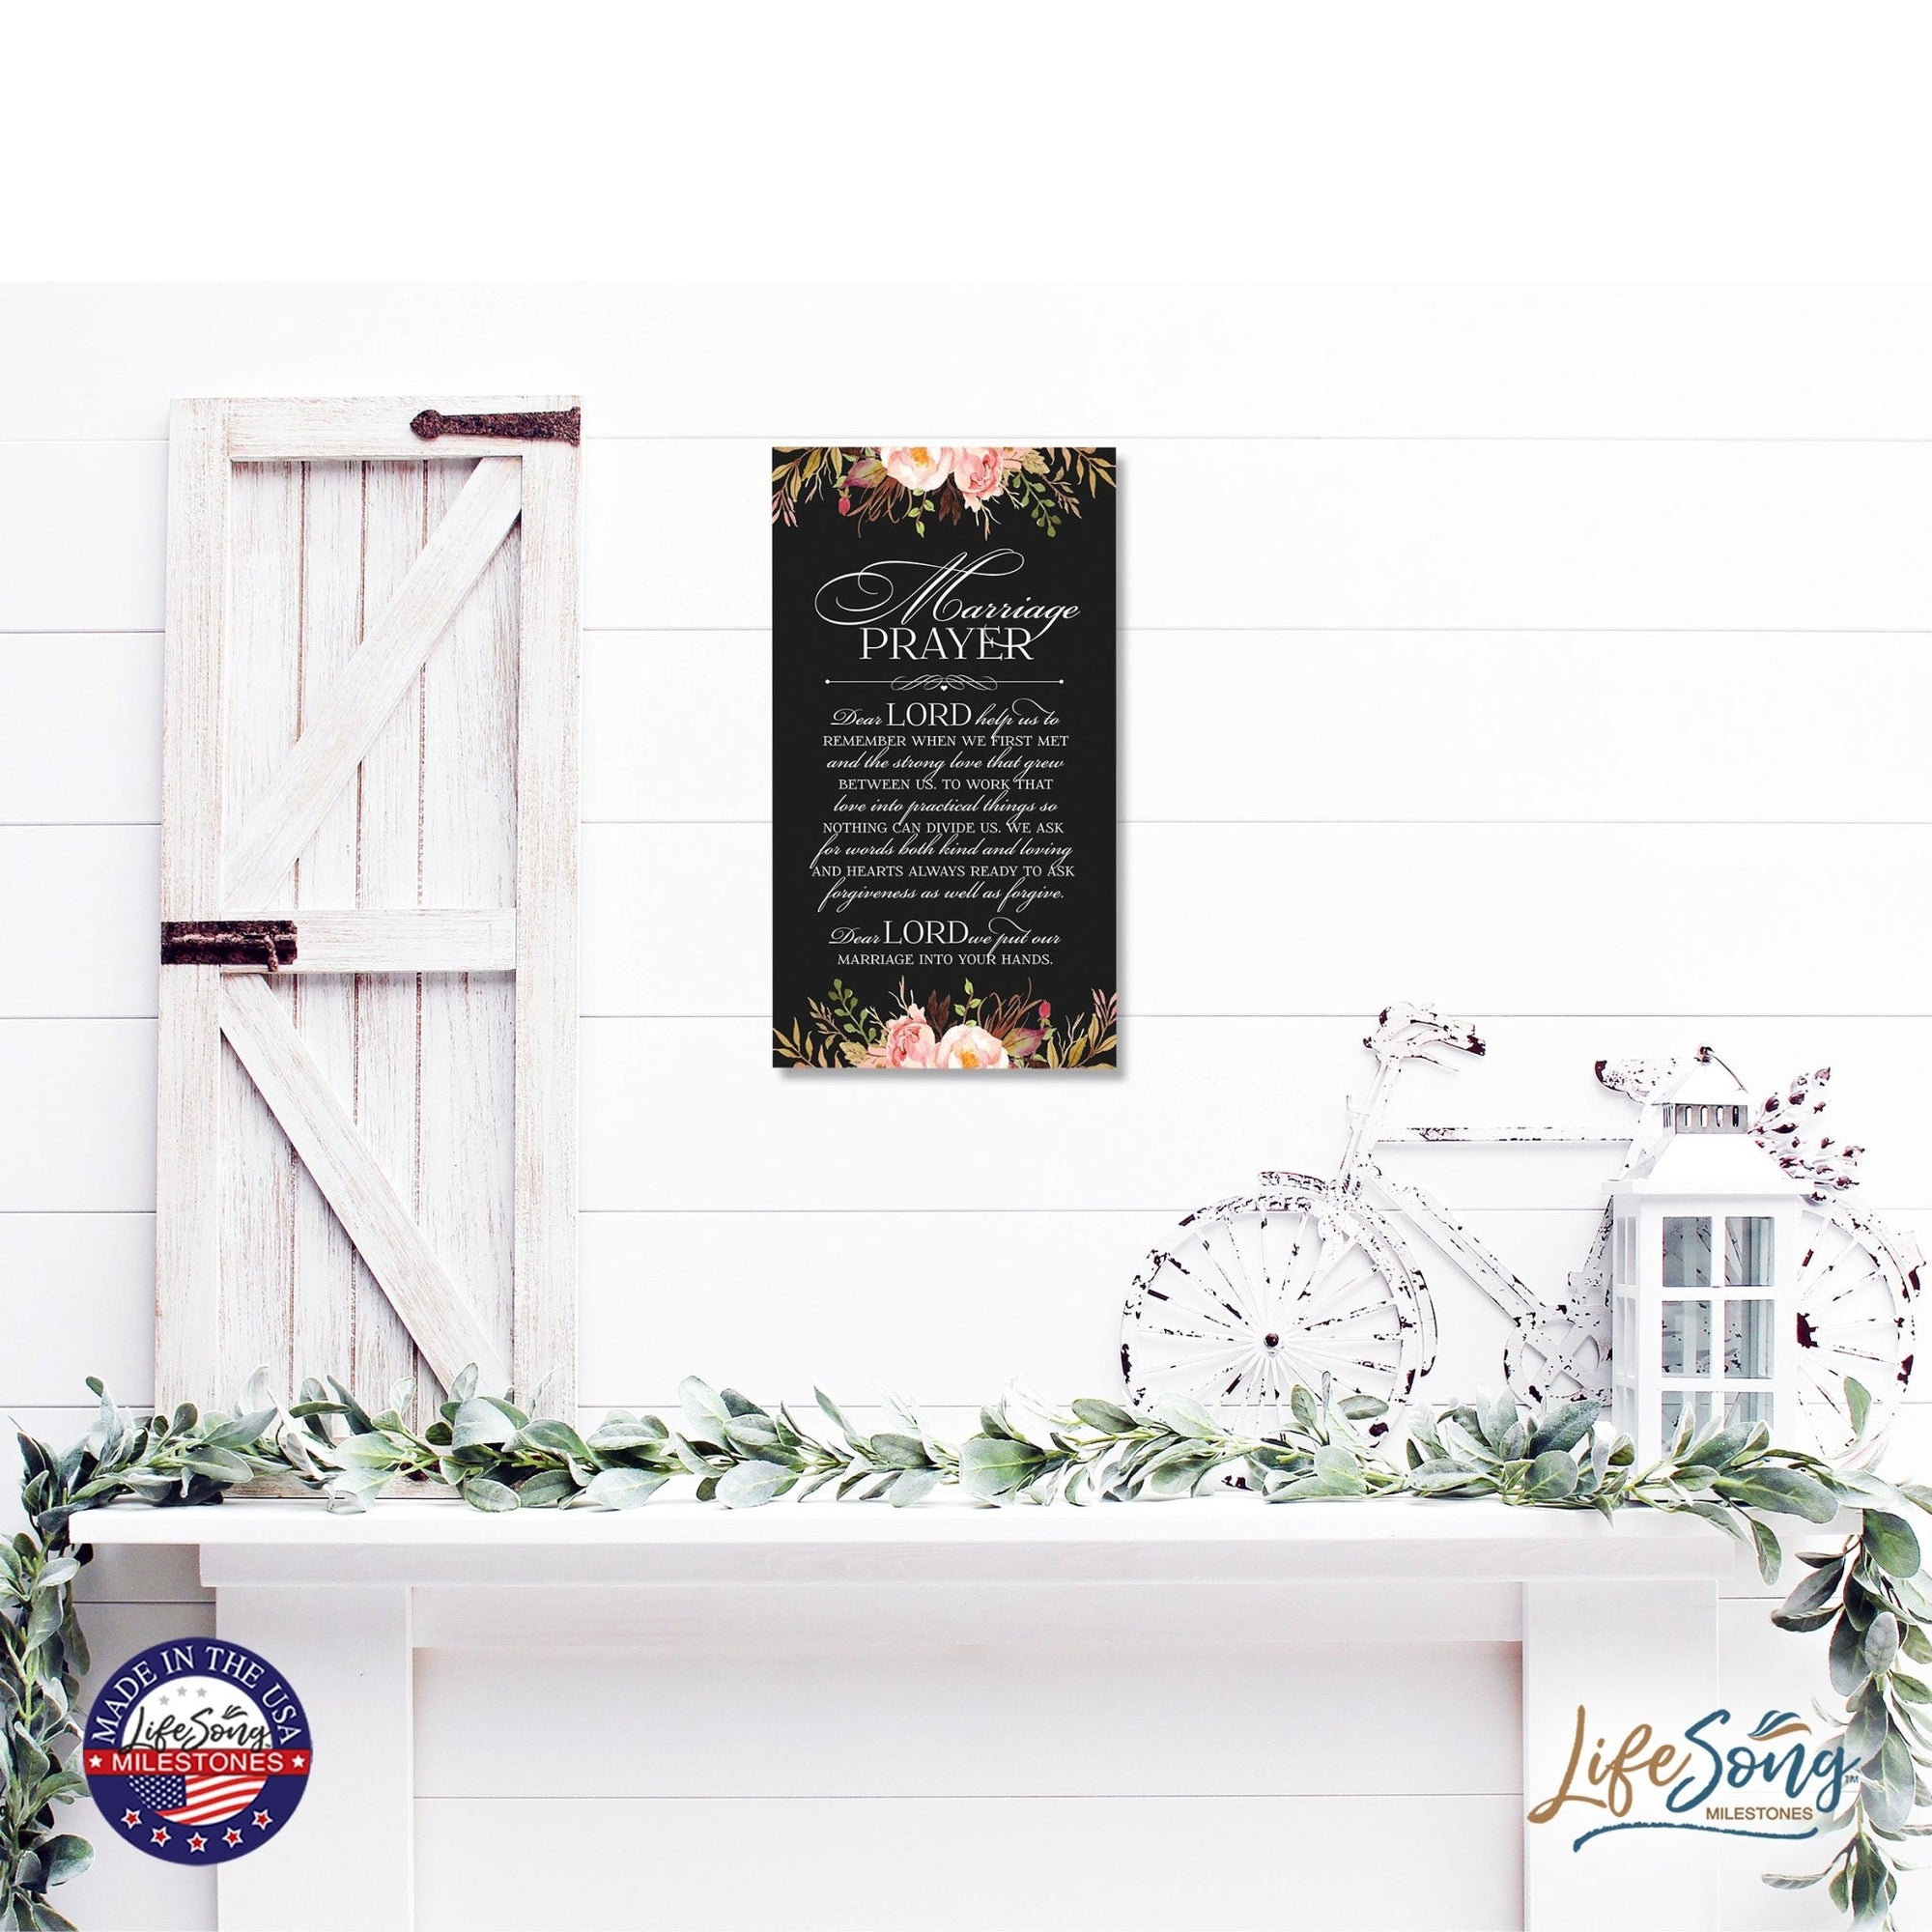 Inspiring Wedding Anniversary Wall Hanging Plaque 8x16 - Marriage Prayer - LifeSong Milestones